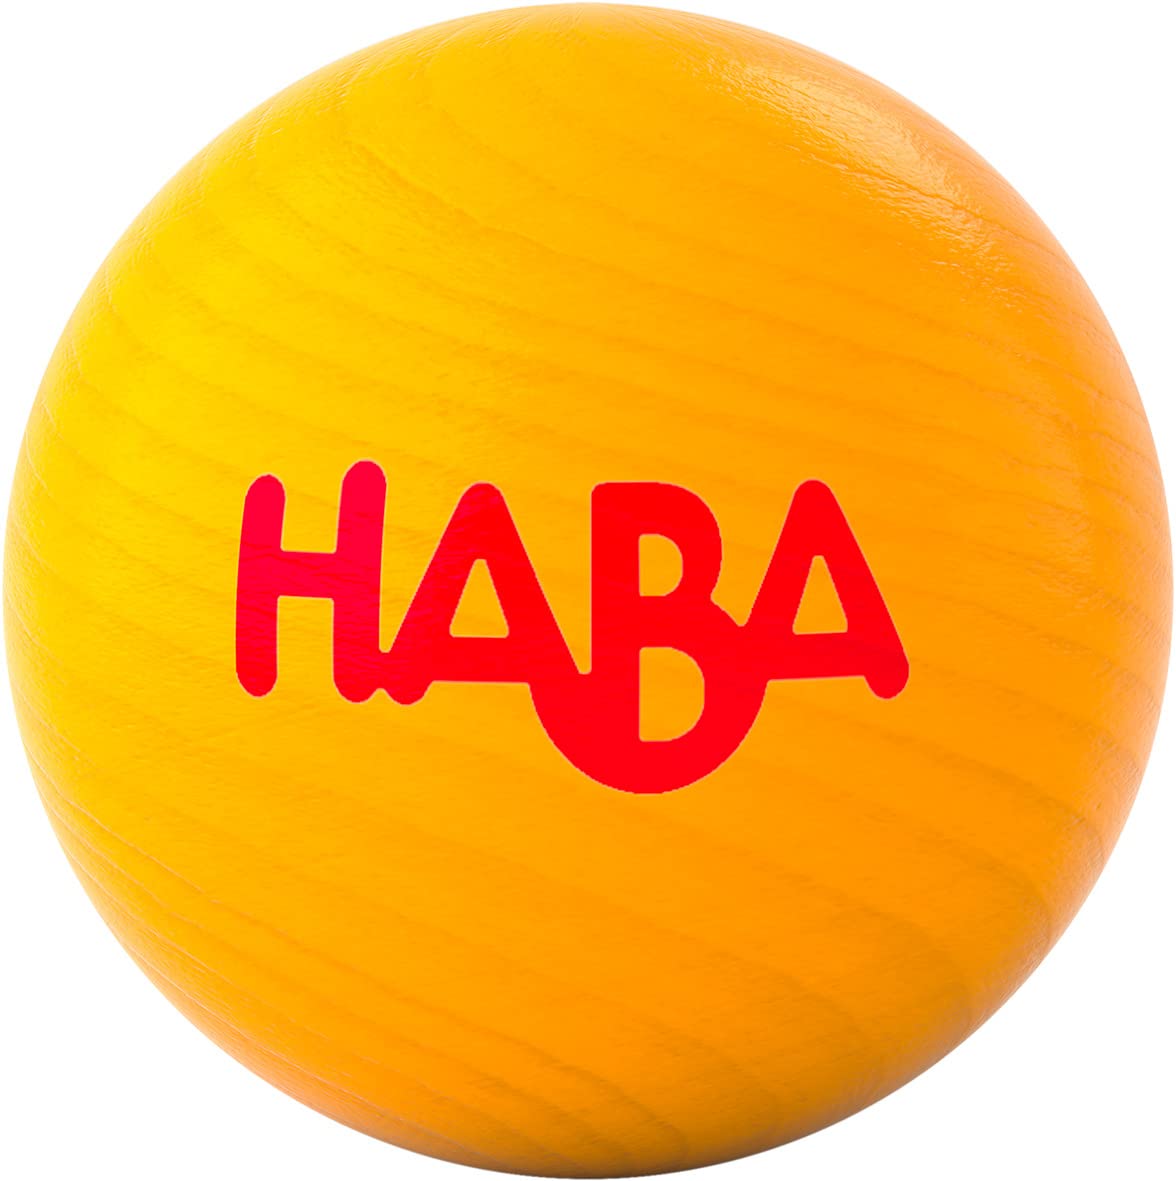 HABA Kullerbu Bucket of 13 Assorted Wooden Balls